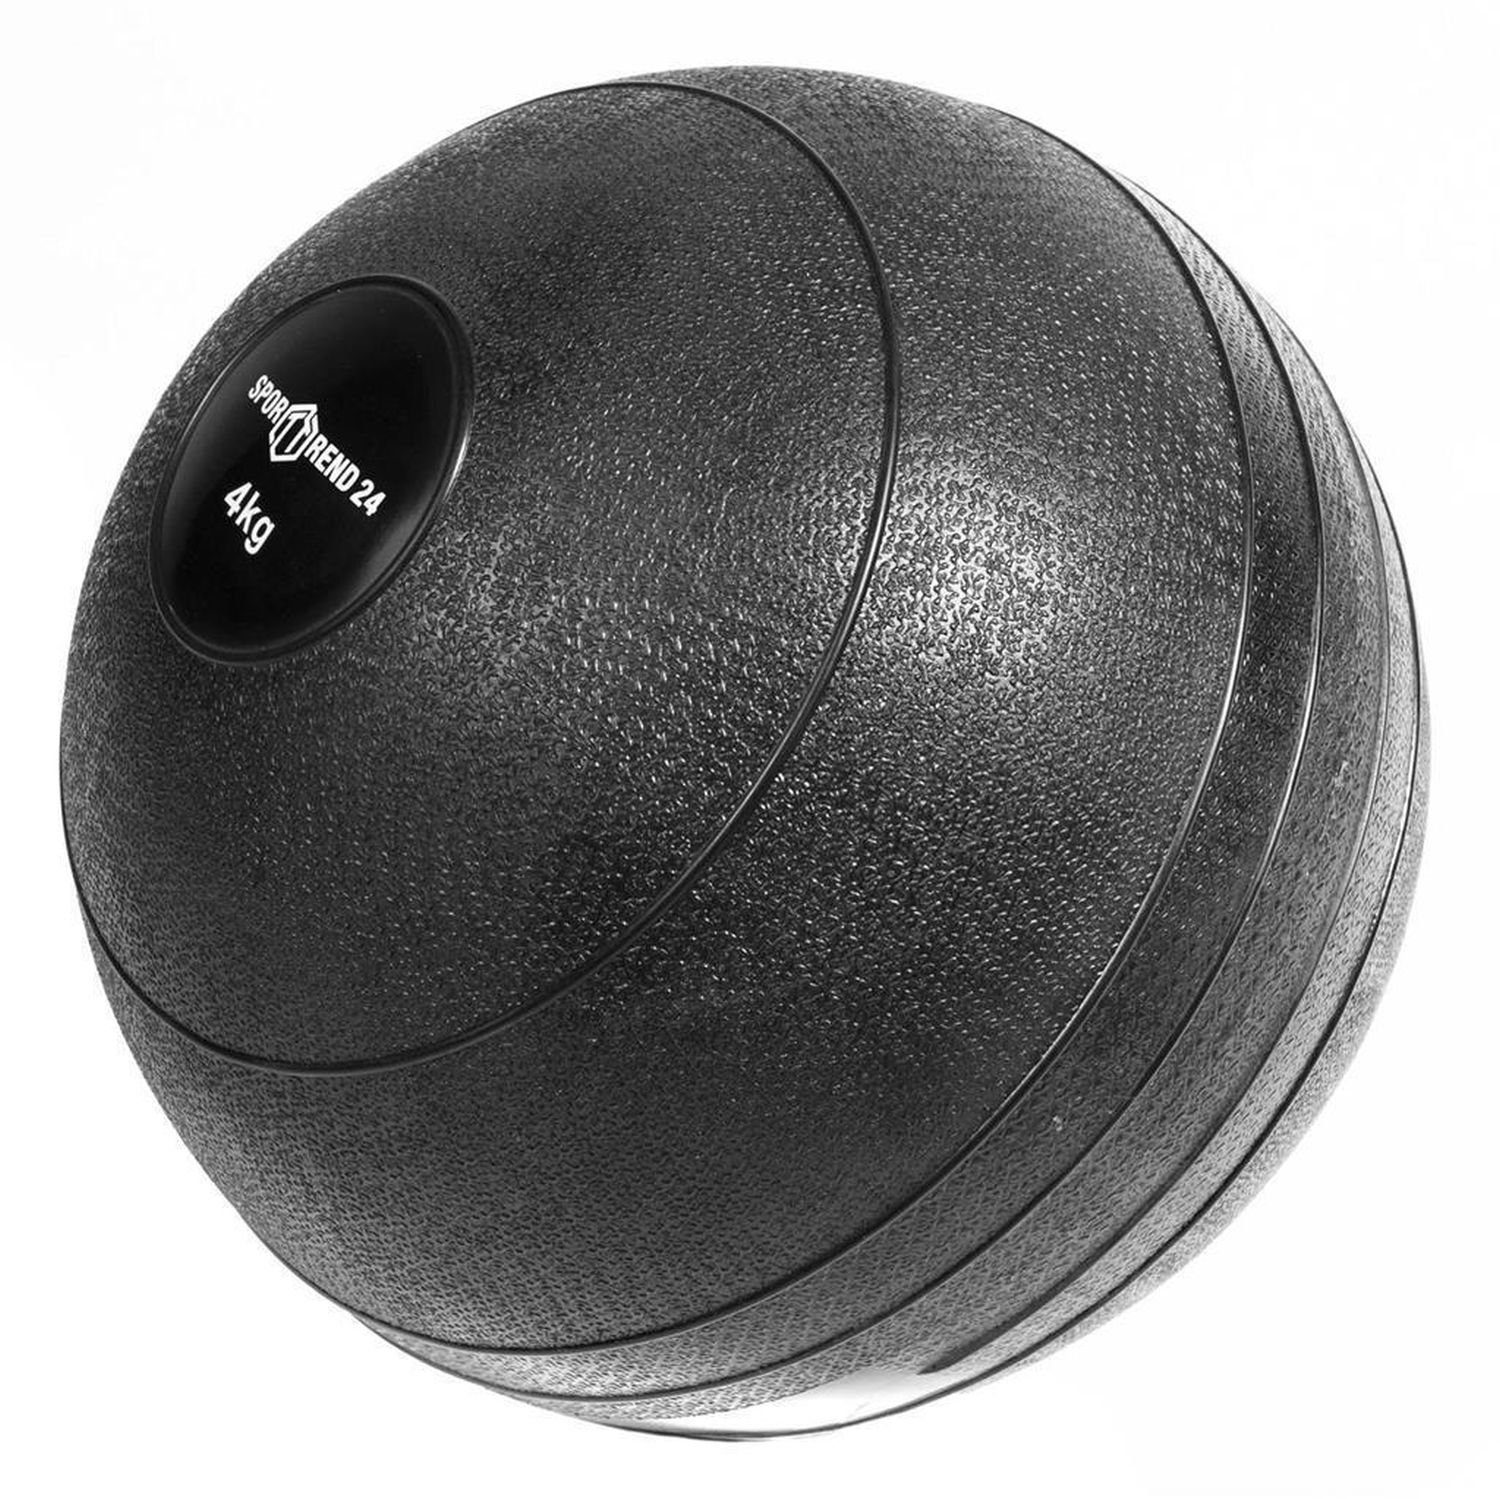 KG Sporttrend Medizinball 4 Jumping Schwungseil 24 Sprungseil Hüpfseil Rope Fitnessseil Sportseil Slamball,